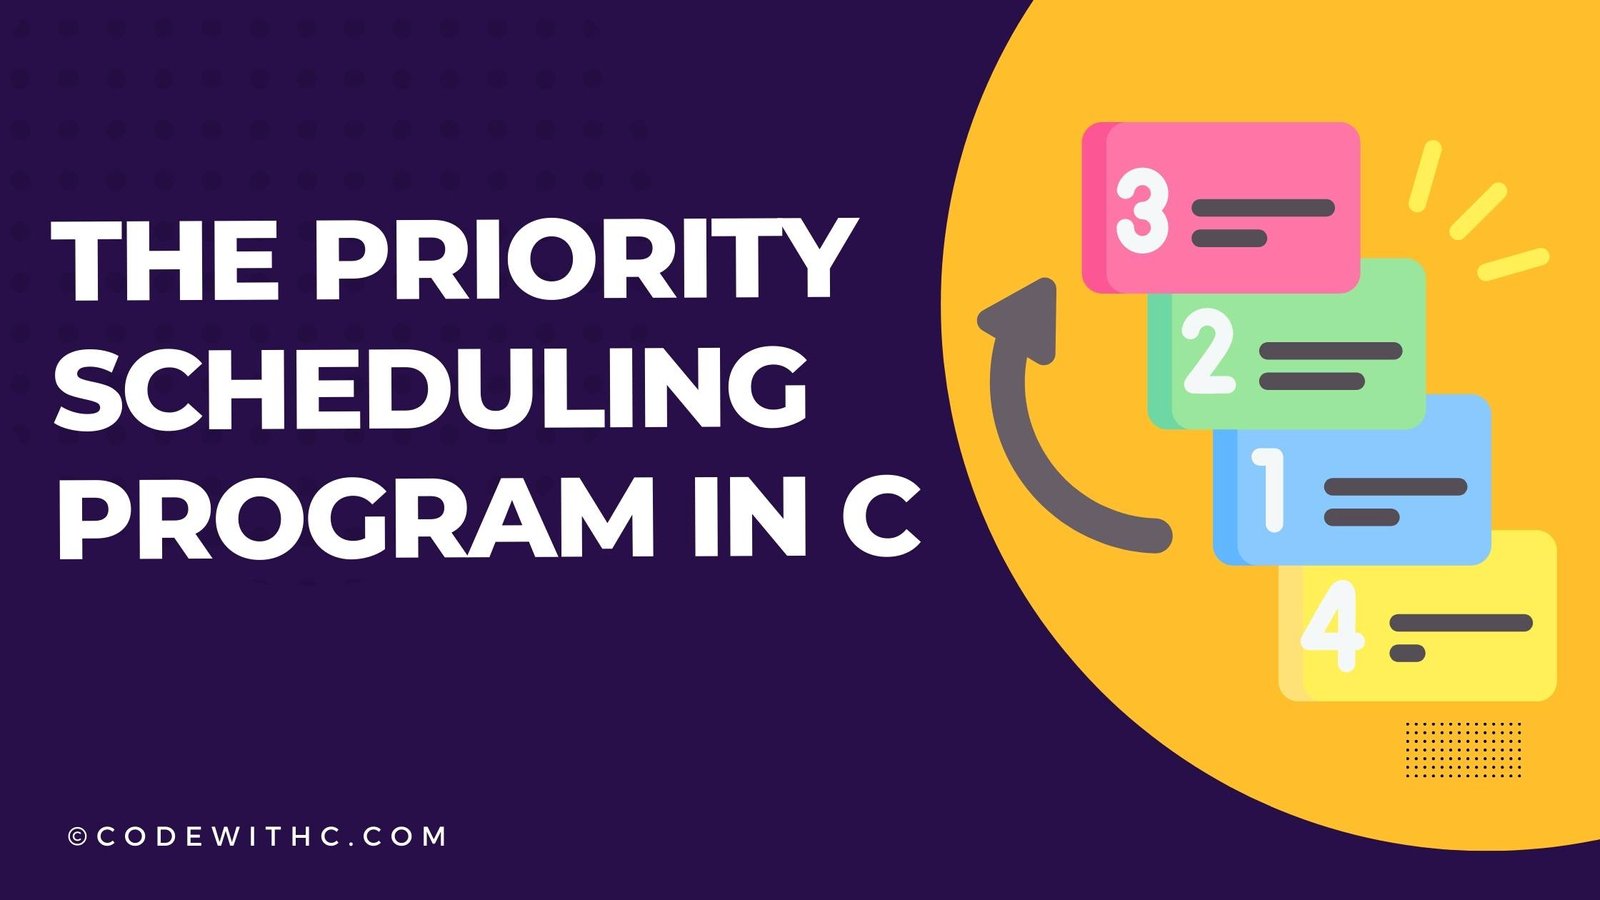 The Priority Scheduling Program In C